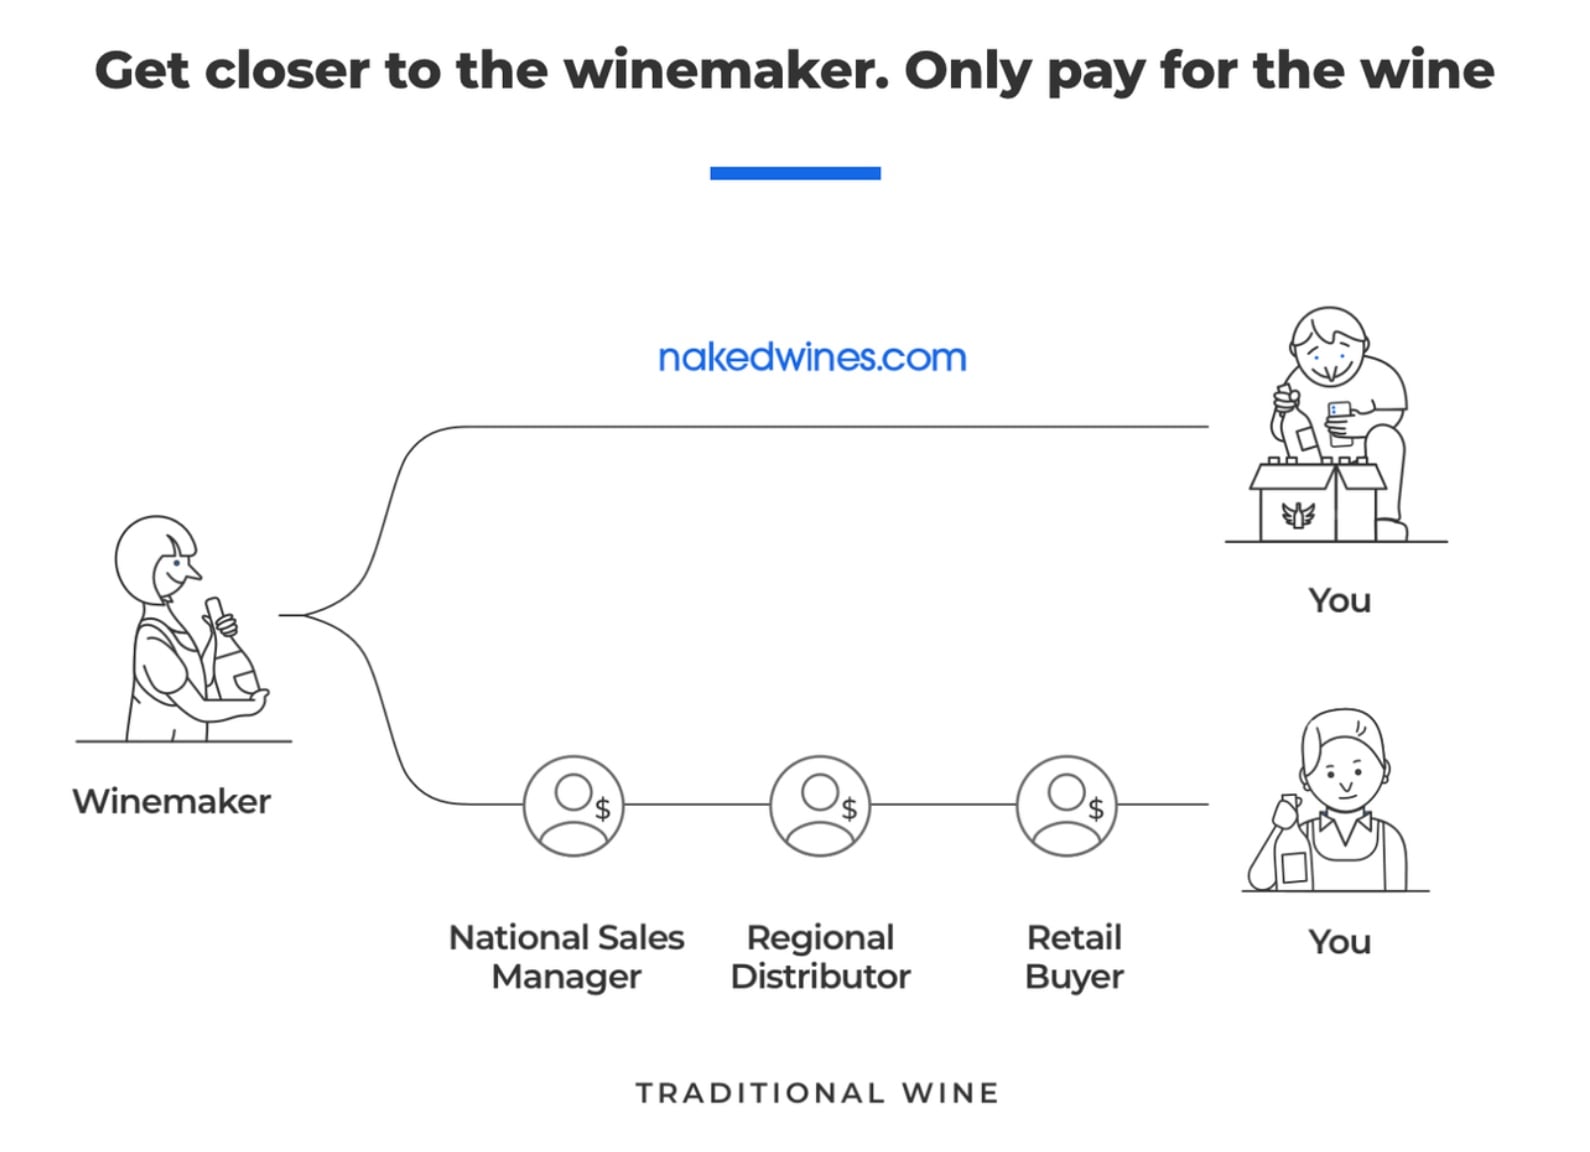 "Get closer to your winemaker" diagram